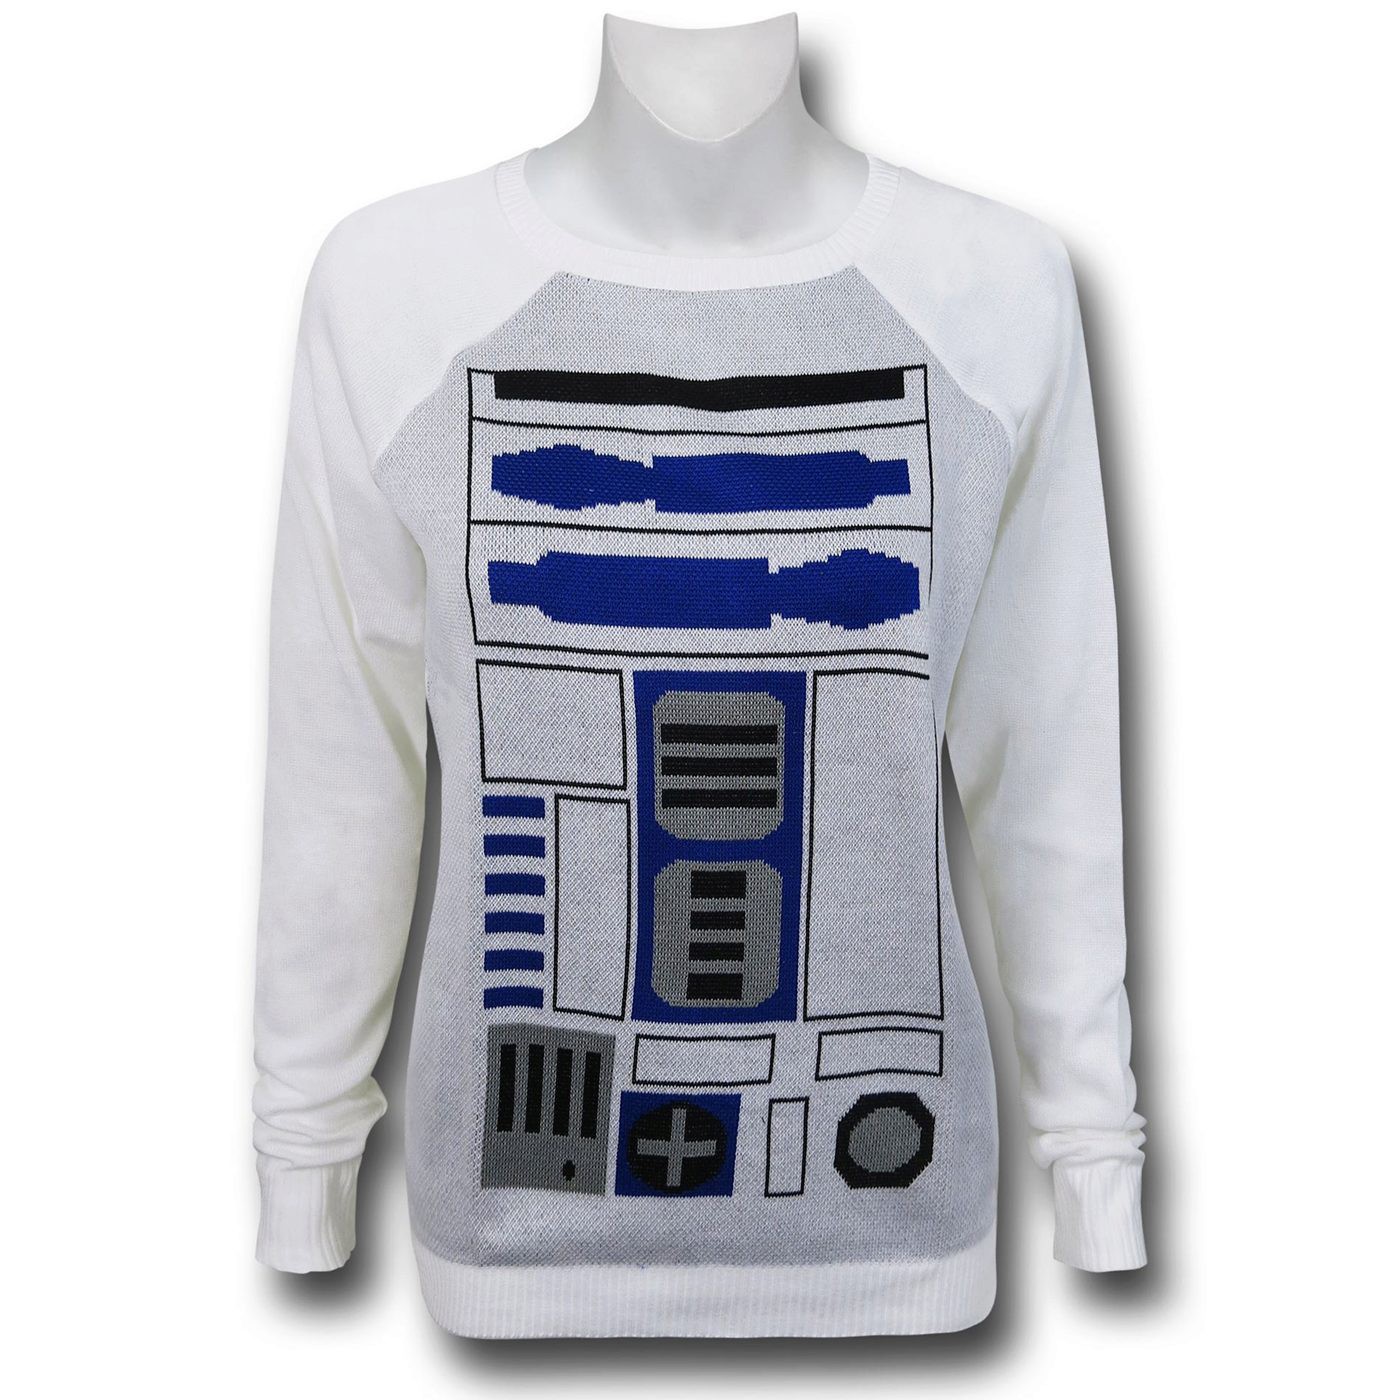 Star Wars R2D2 Women's Costume Sweater